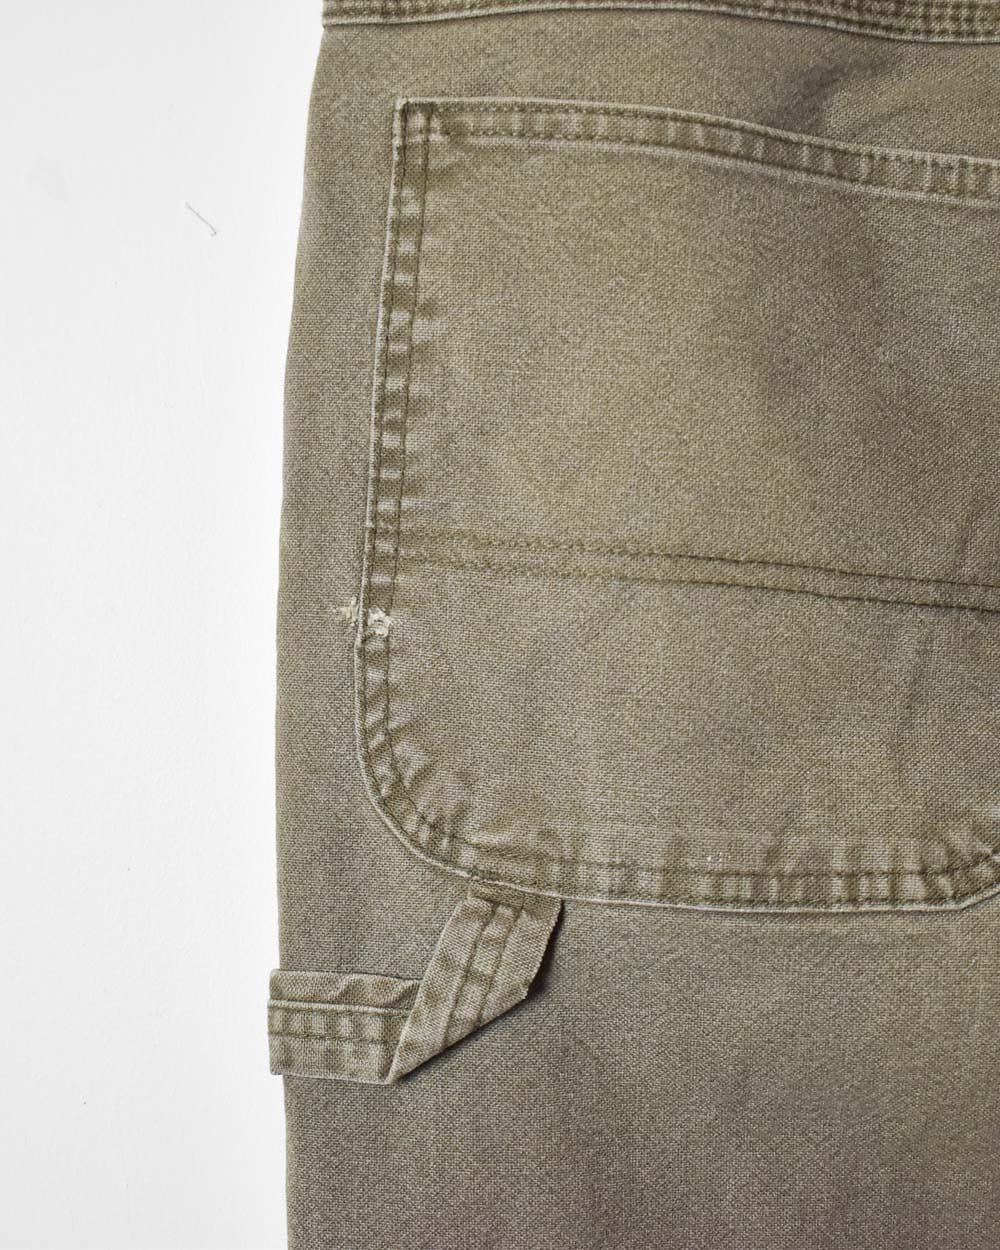 Khaki Dickies Carpenter Jeans - W38 L32